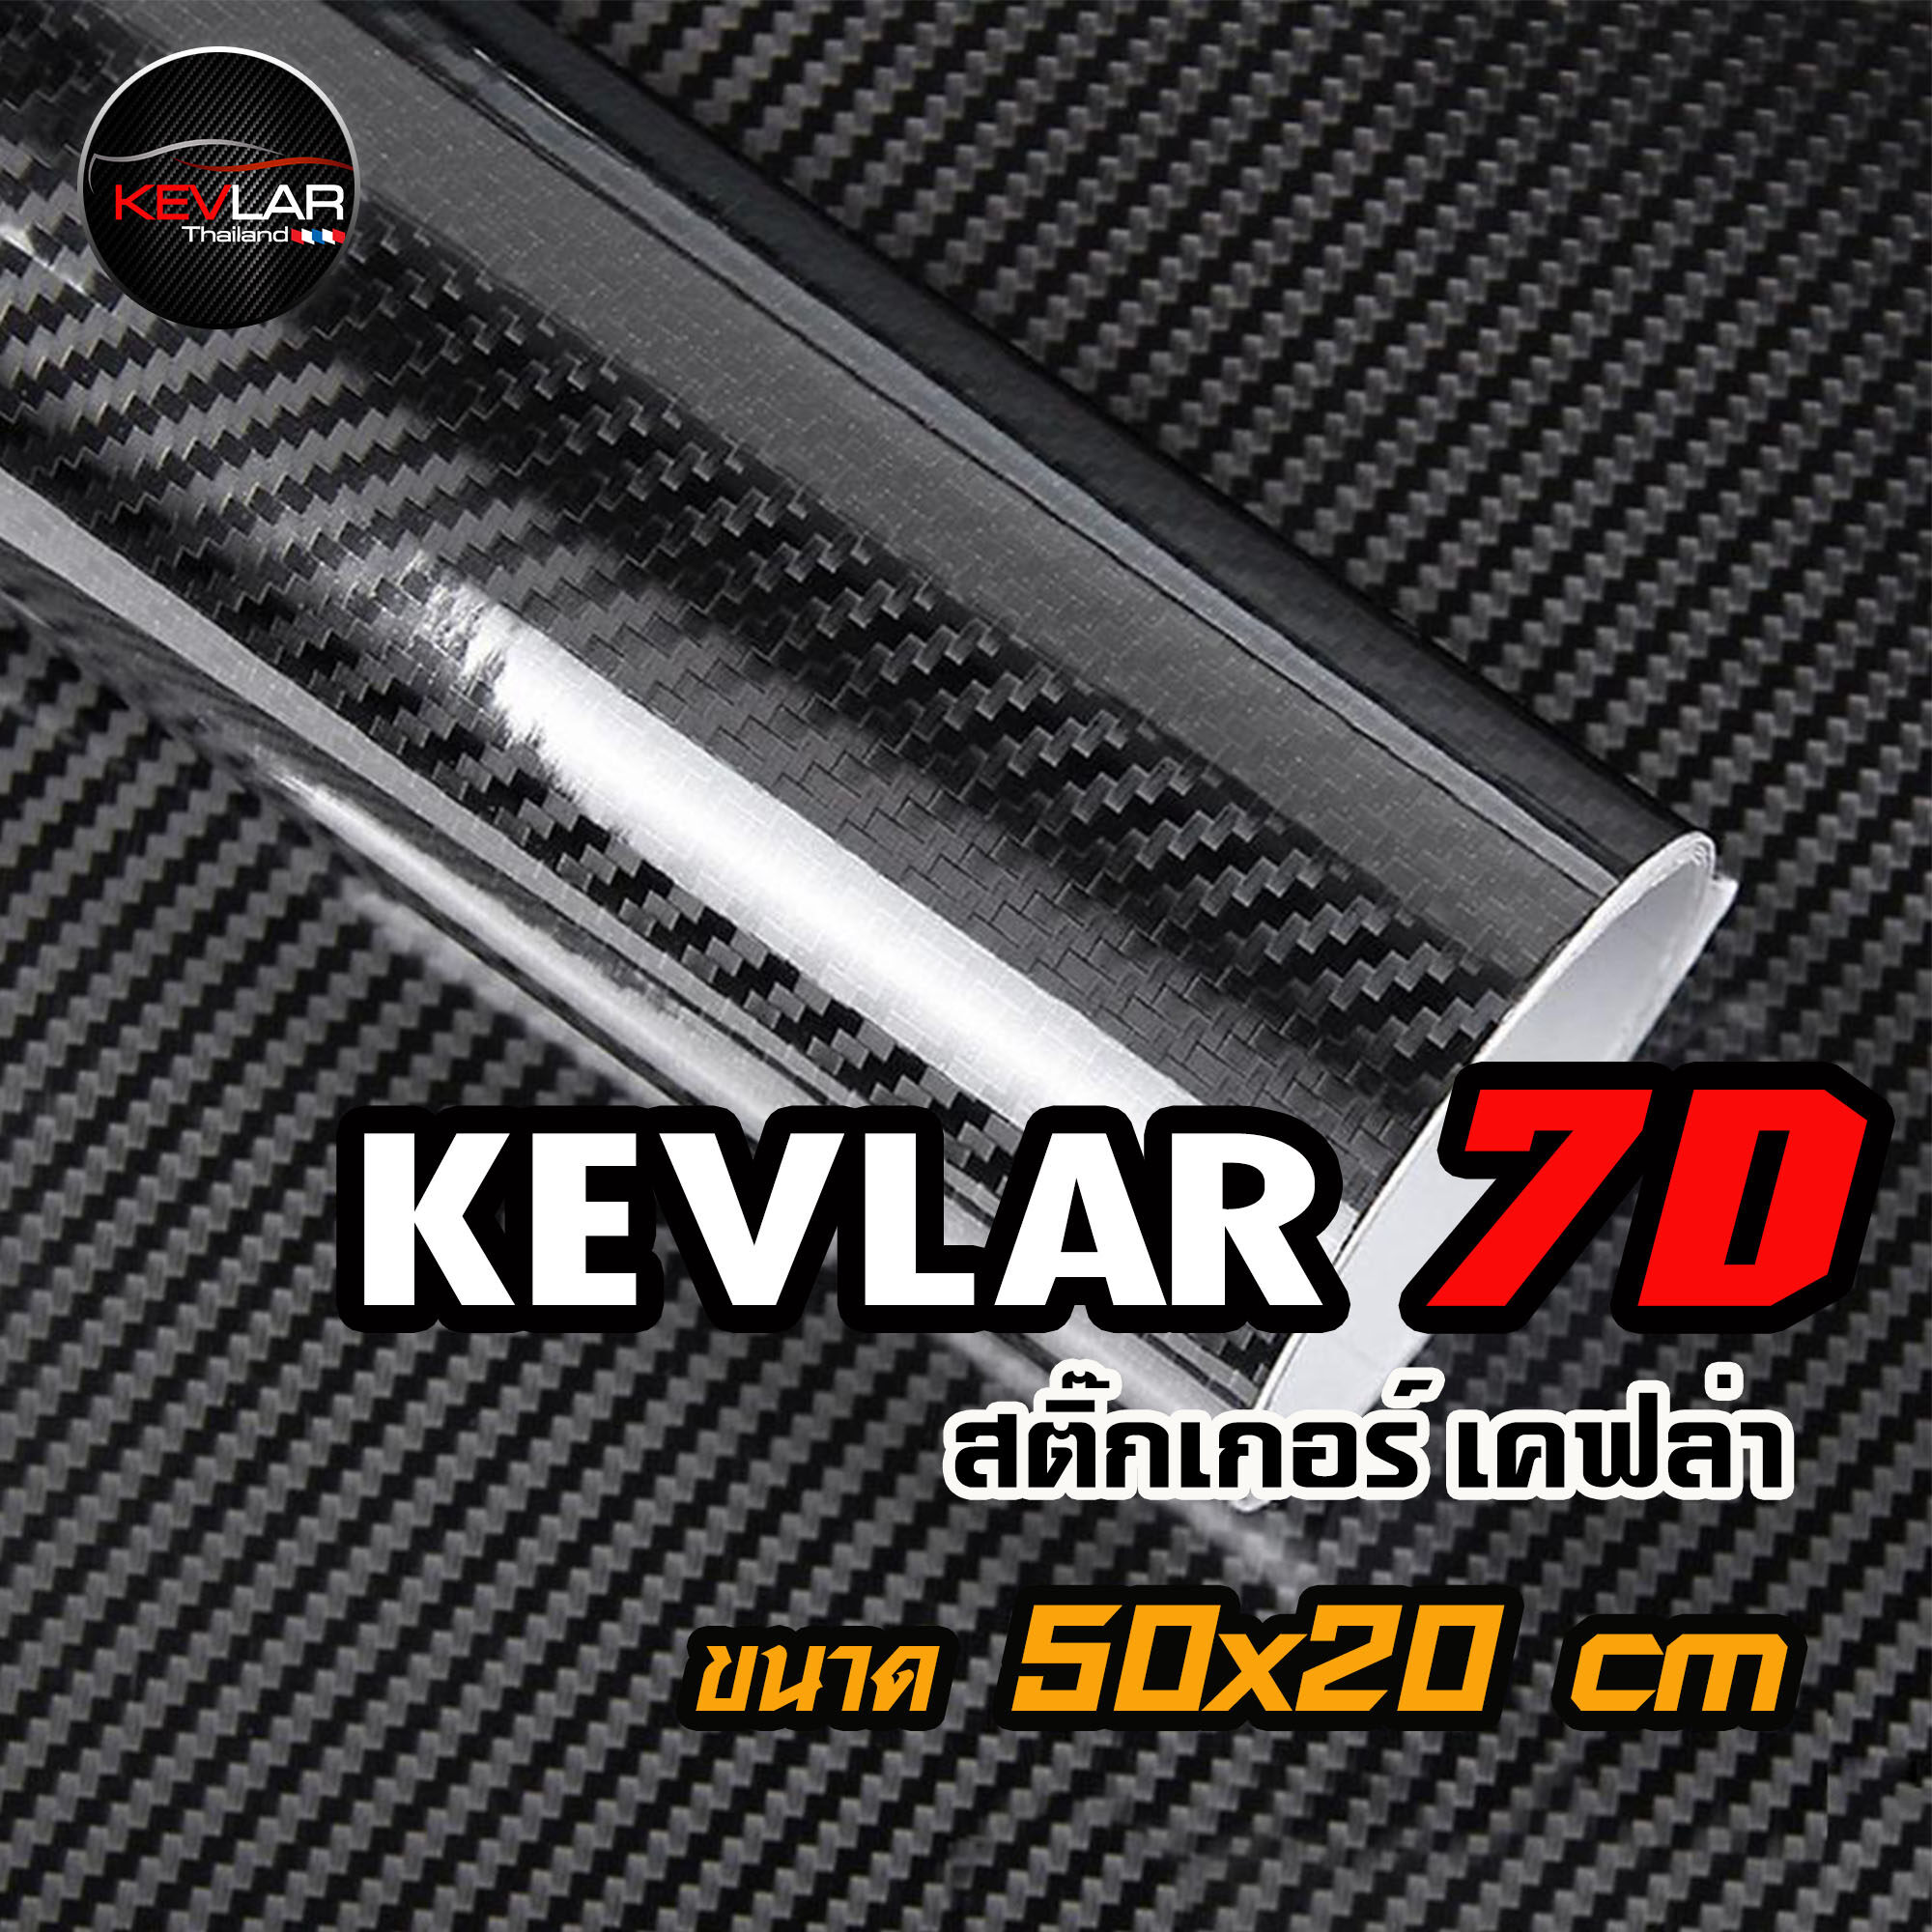 Sticker Kevlar carbon สติ๊กเกอร์ เคฟล่า คาร์บอน 7D คุณภาพสูง ขนาด 50x20 cm